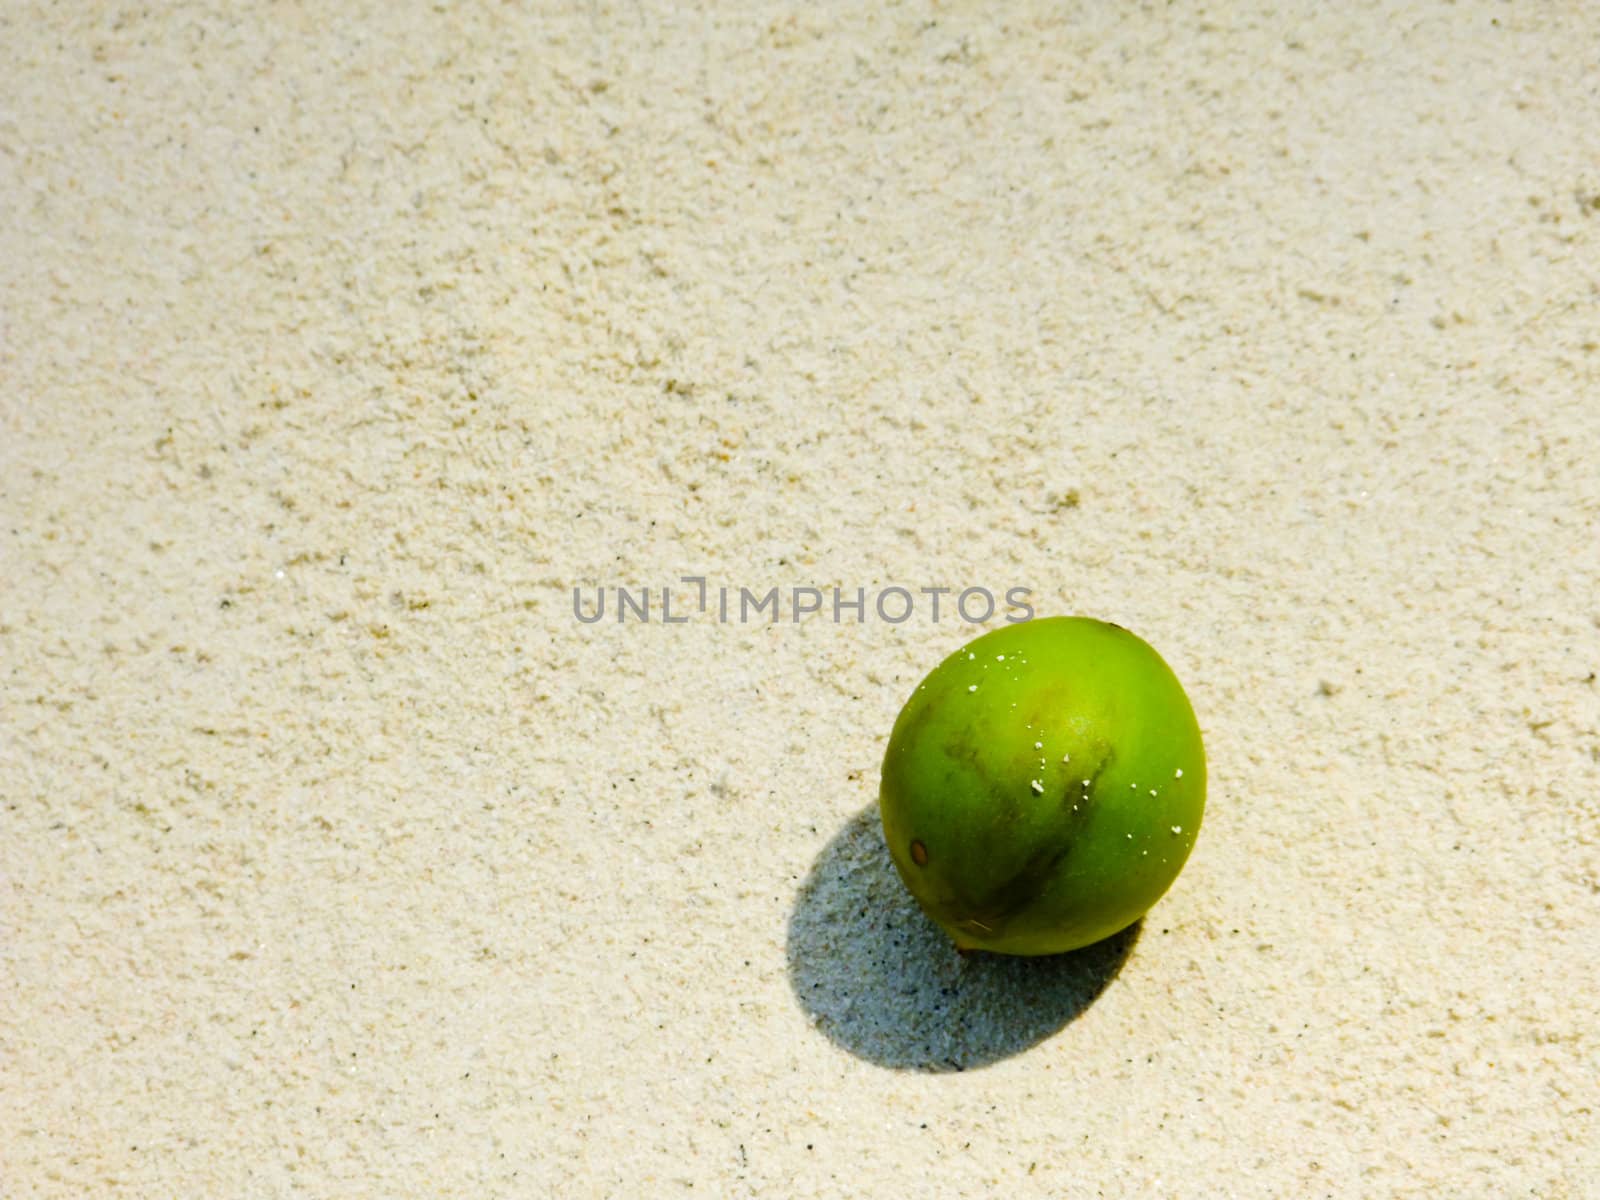 Green coconut on white sand beach